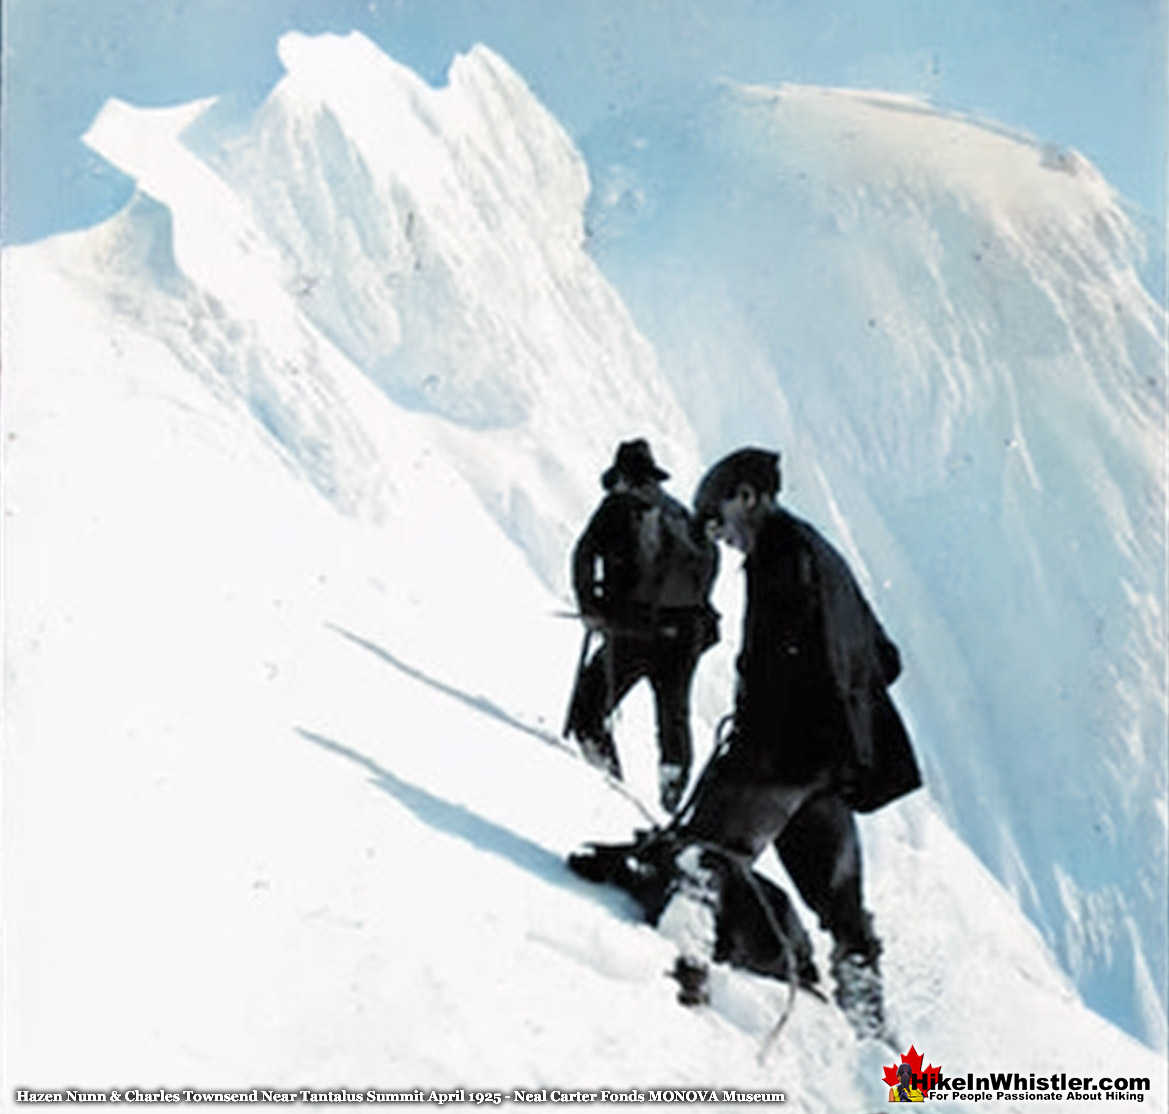 Hazen Nunn & Charles Townsend Near Tantalus Summit 1925